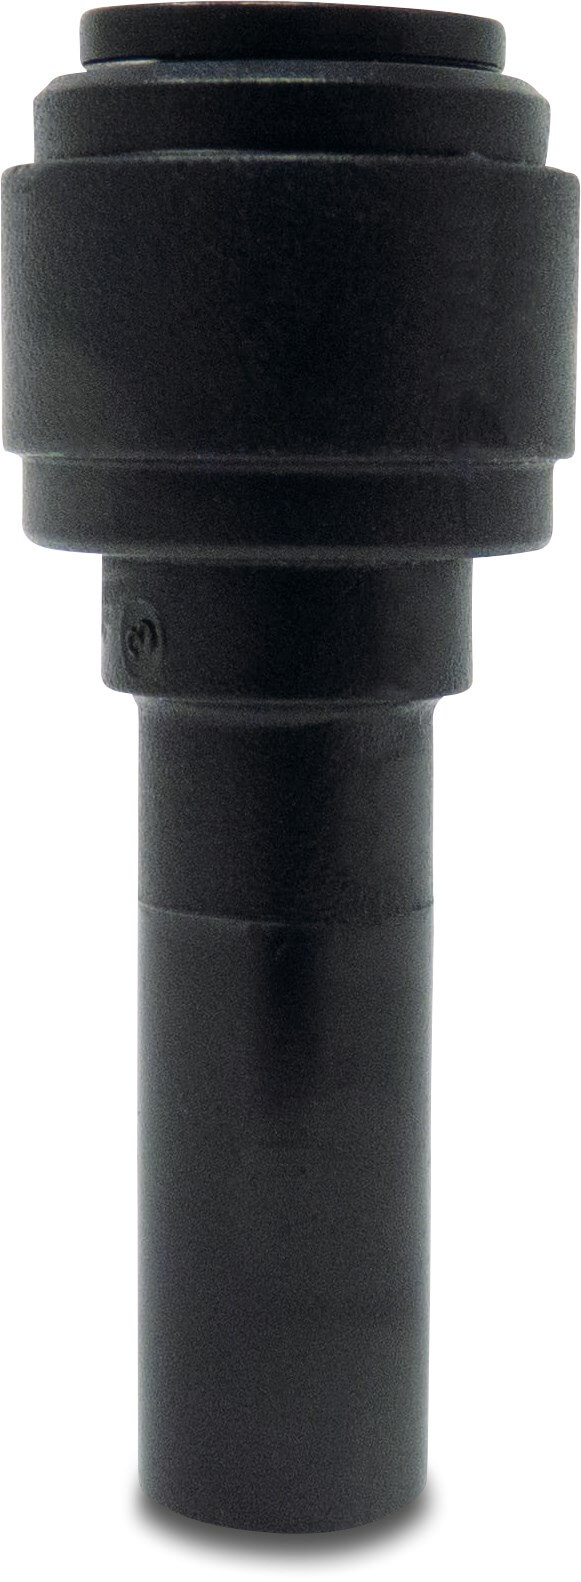 Reducer socket POM 4 mm x 5 mm spigot x push-in 20bar black WRAS type Aquaspeed